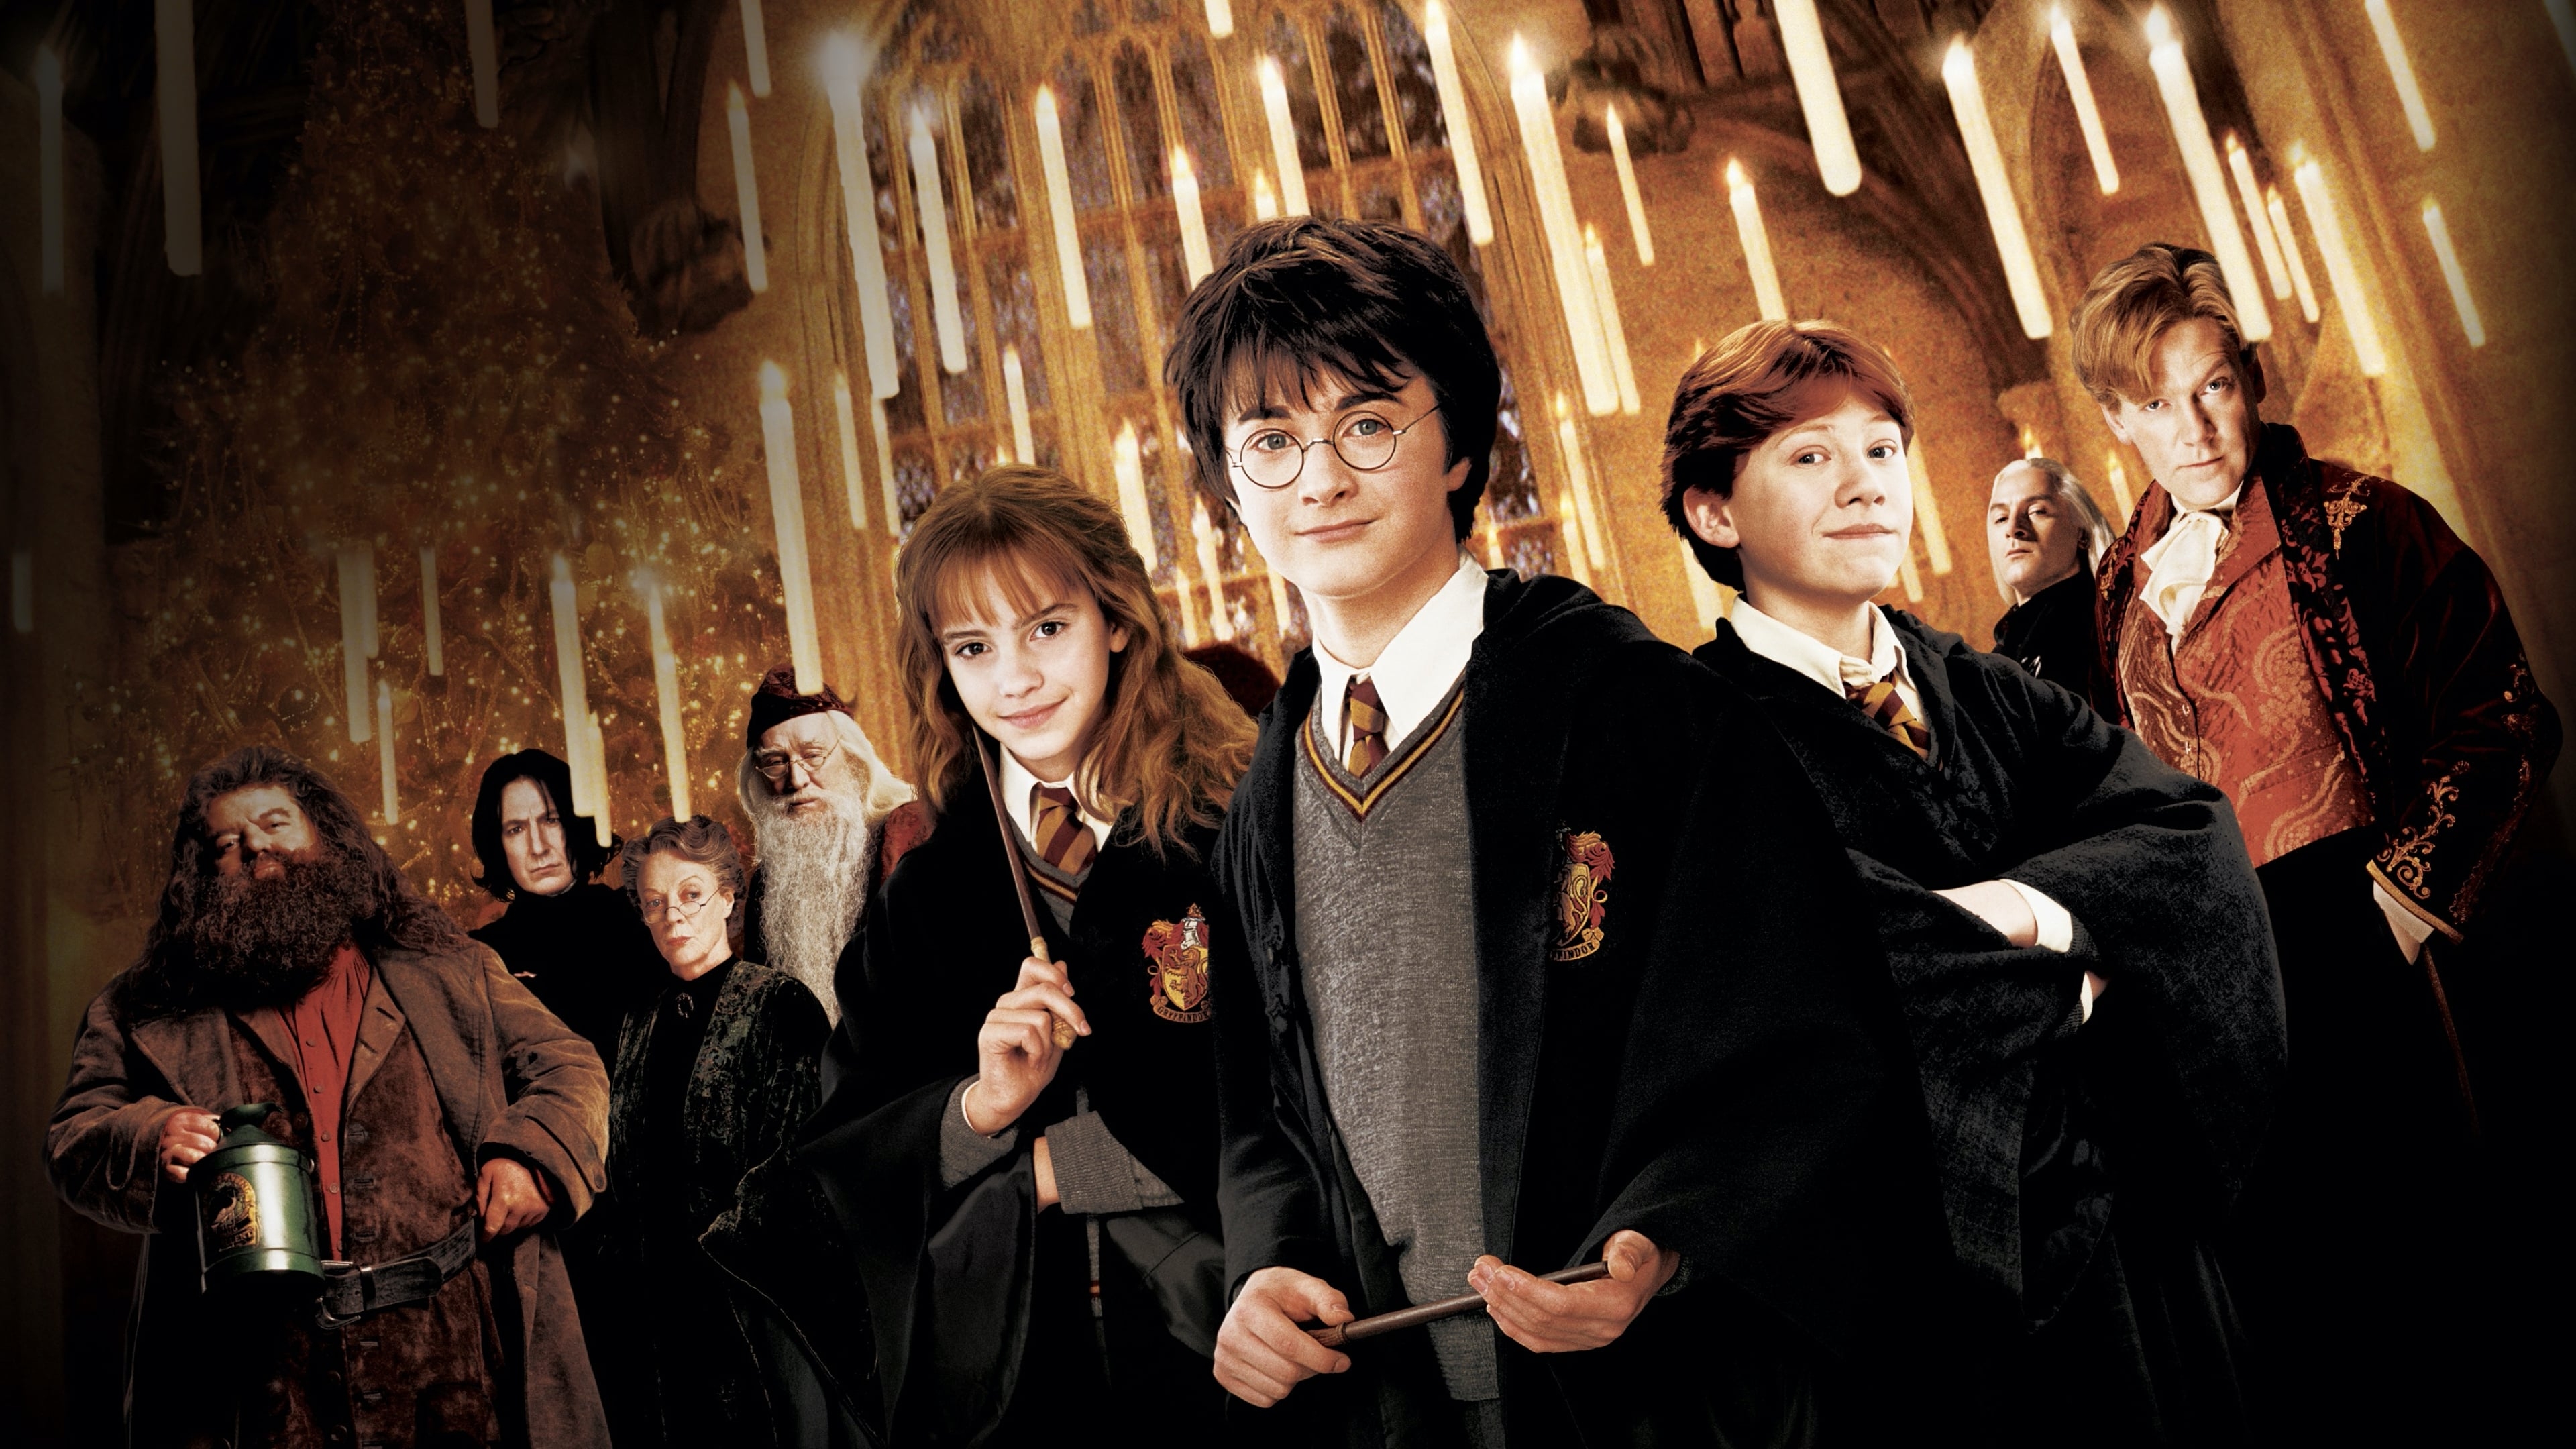 HD wallpaper, Emma Watson As Hermione Granger, Daniel Radcliffe As Harry Potter, Harry Potter And The Chamber Of Secrets, Ron Weasley